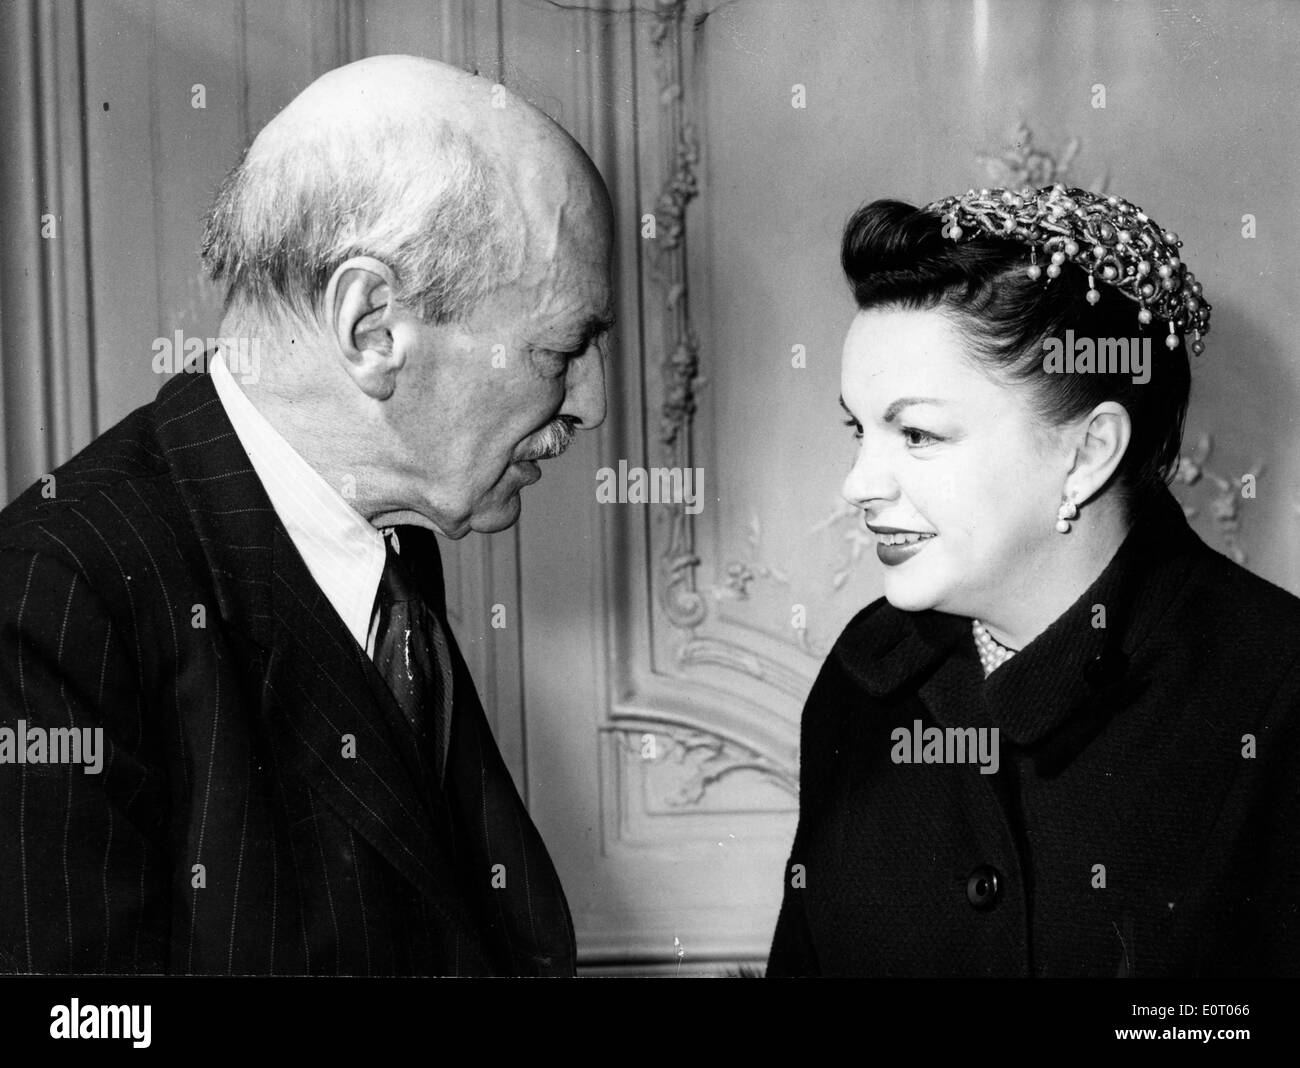 Actress Judy Garland talks with man at a party Stock Photo